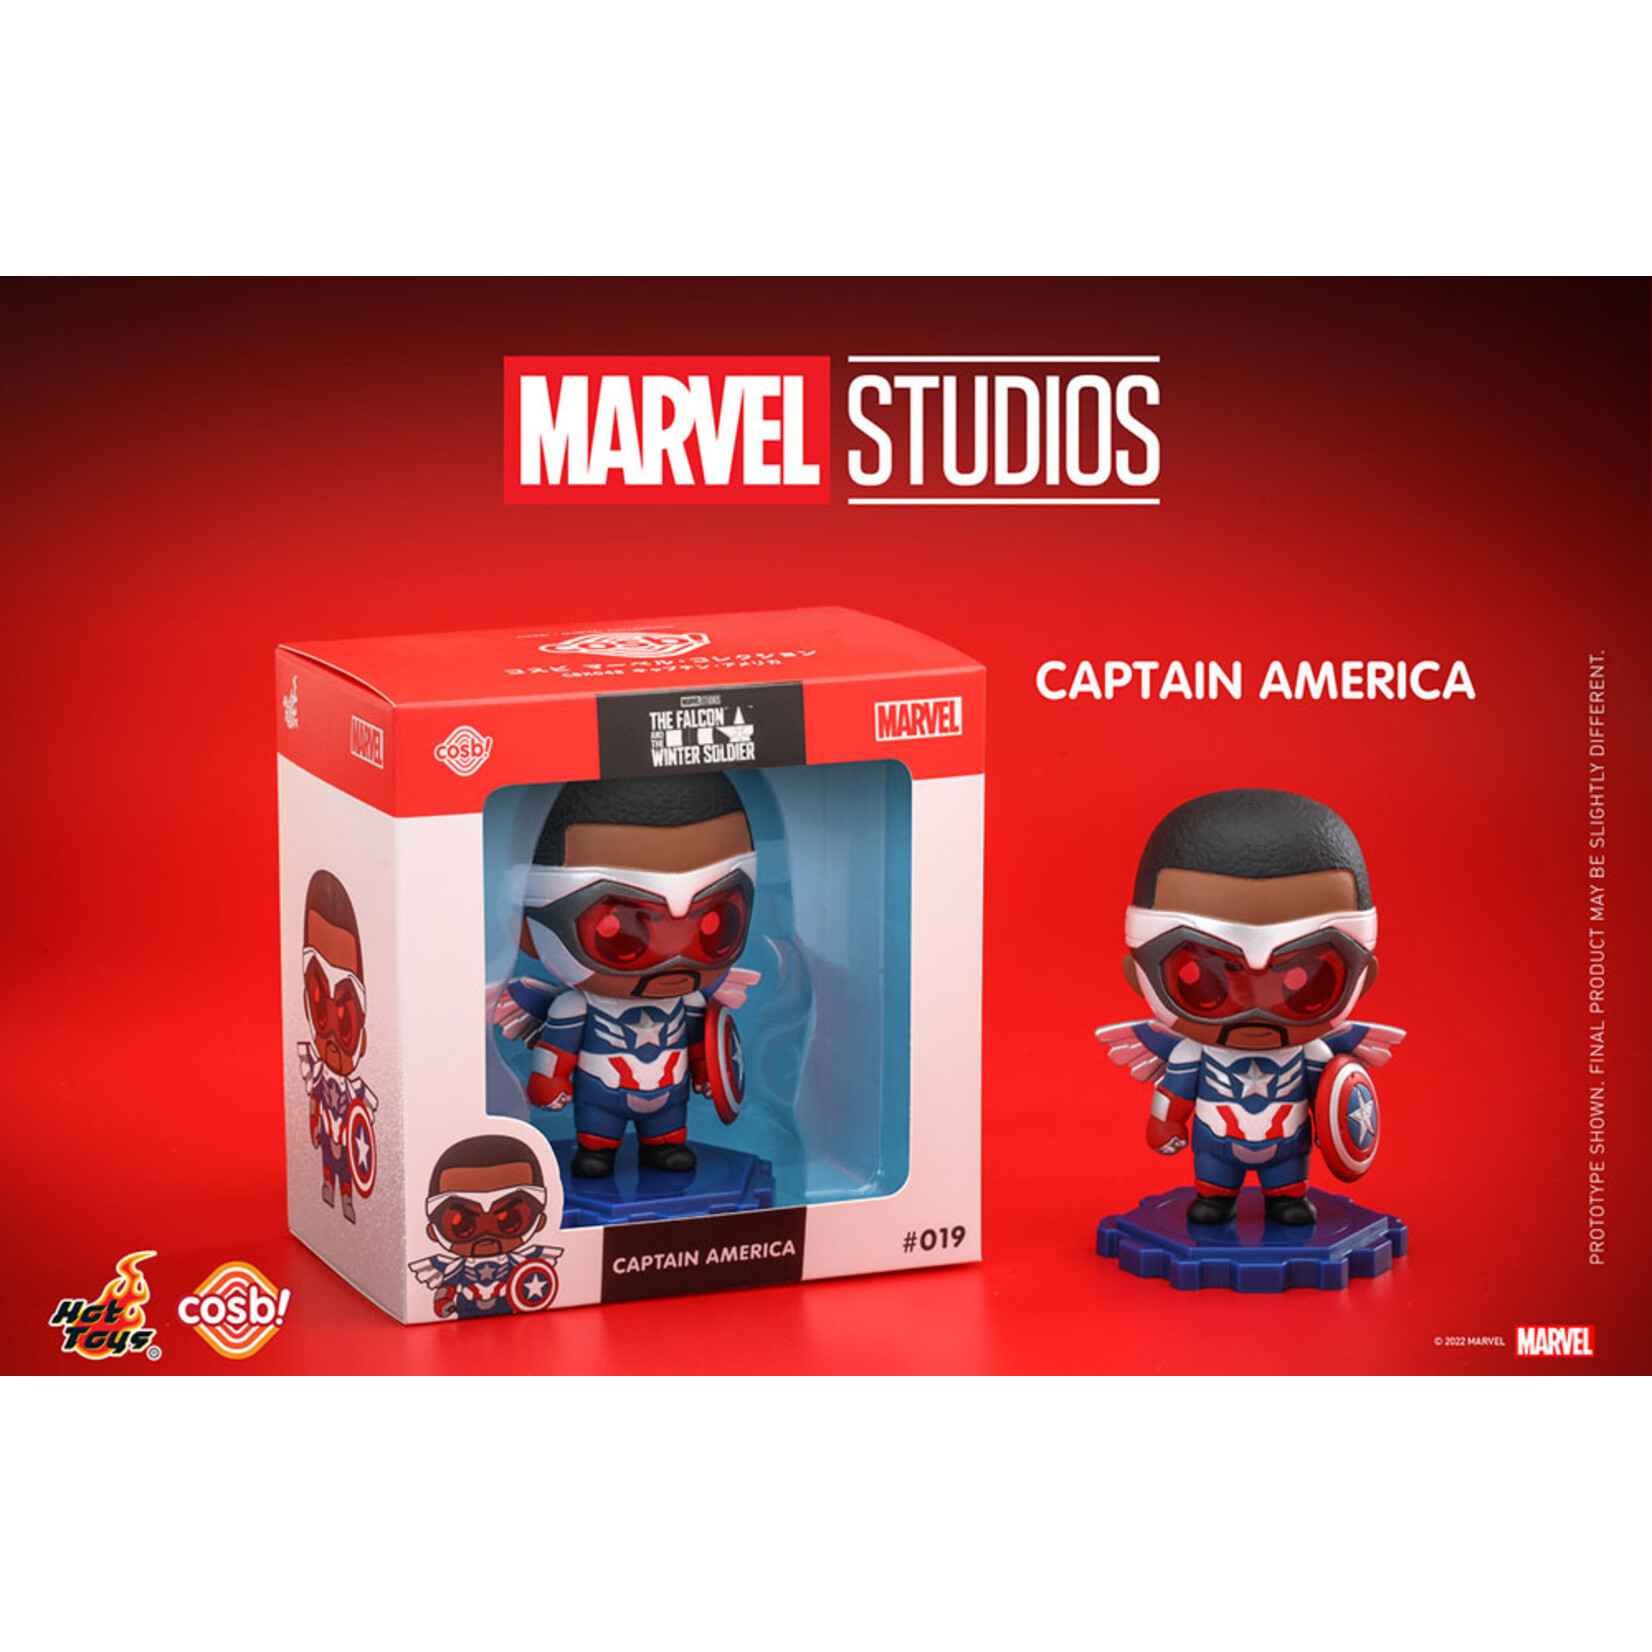 Hot Toys Hot Toys Marvel Cosbi Mini Figure Captain America